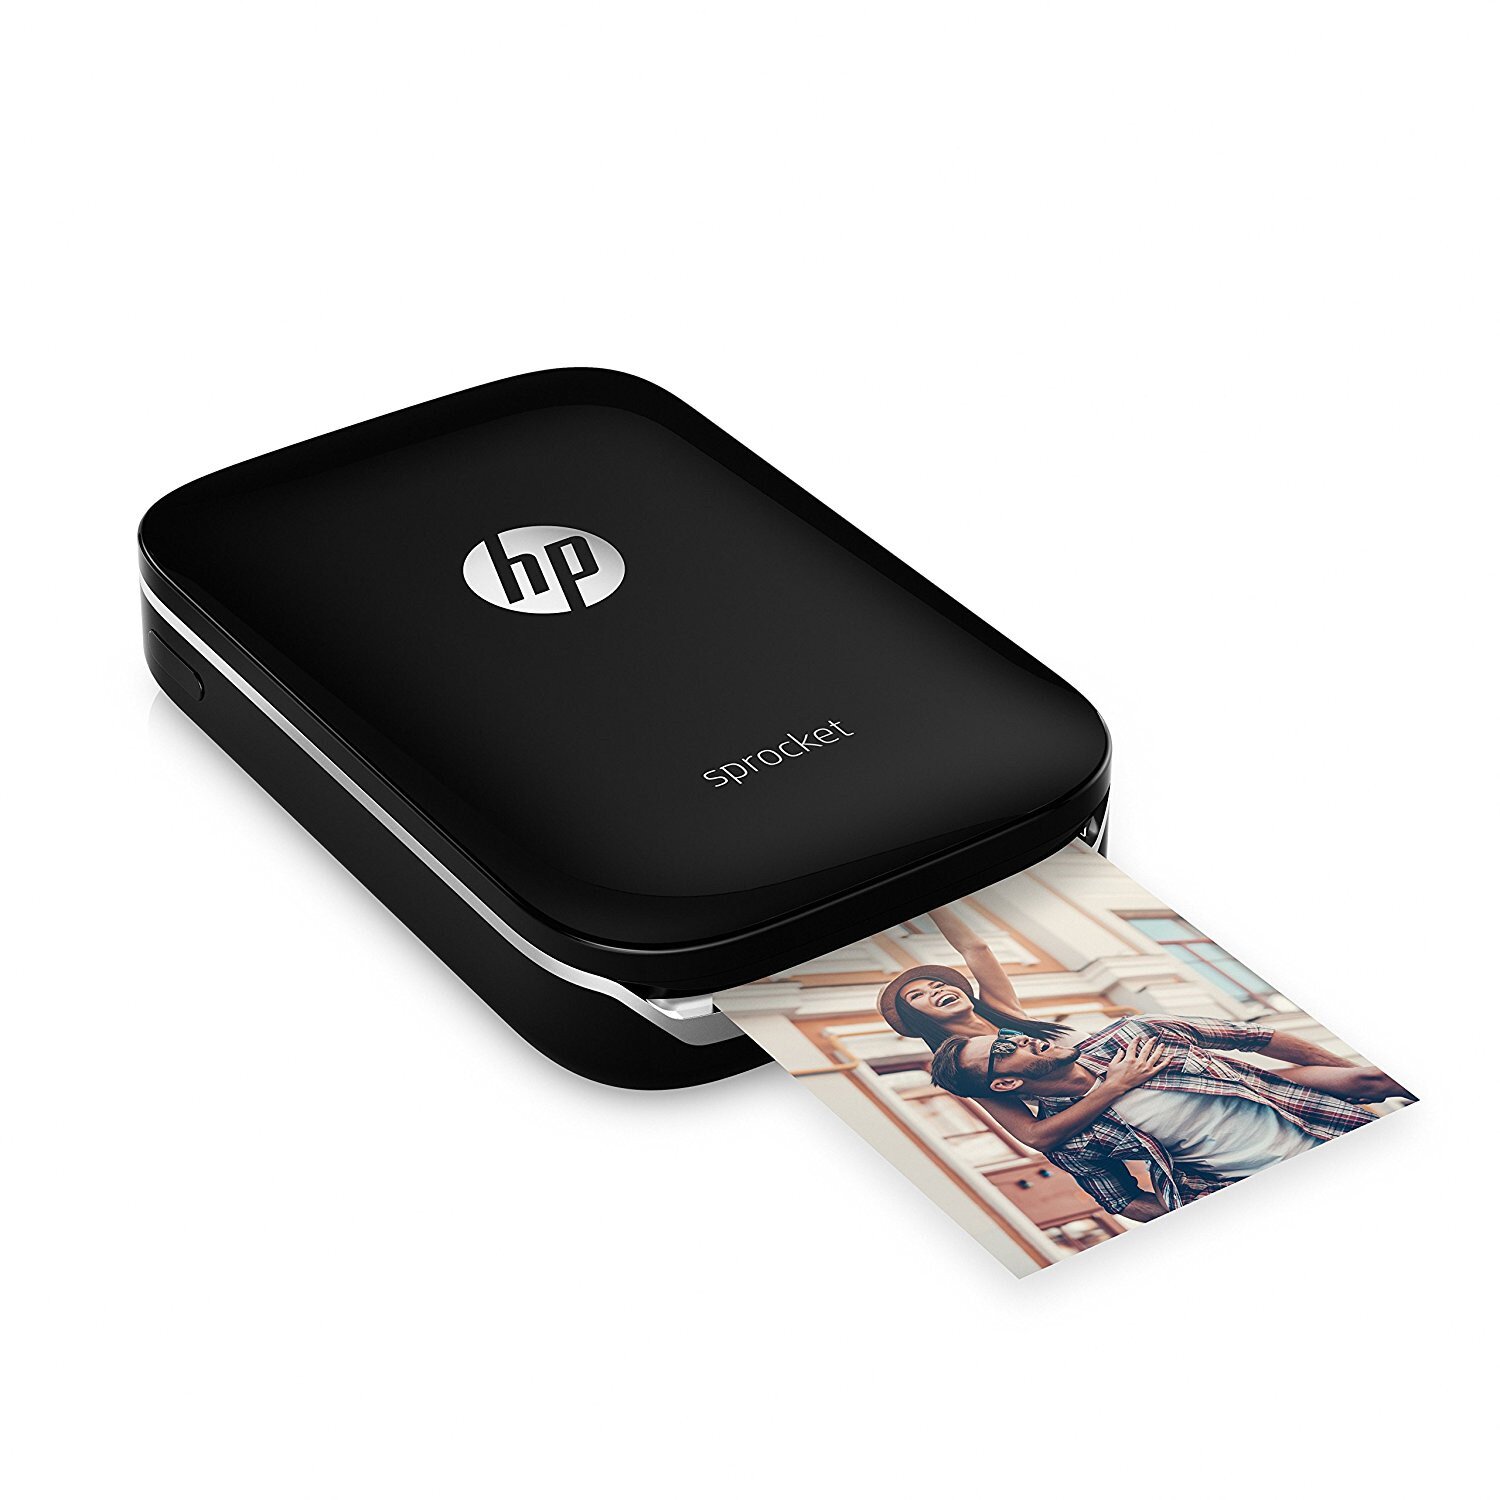 Buy HP Sprocket Photo Printer online Worldwide 